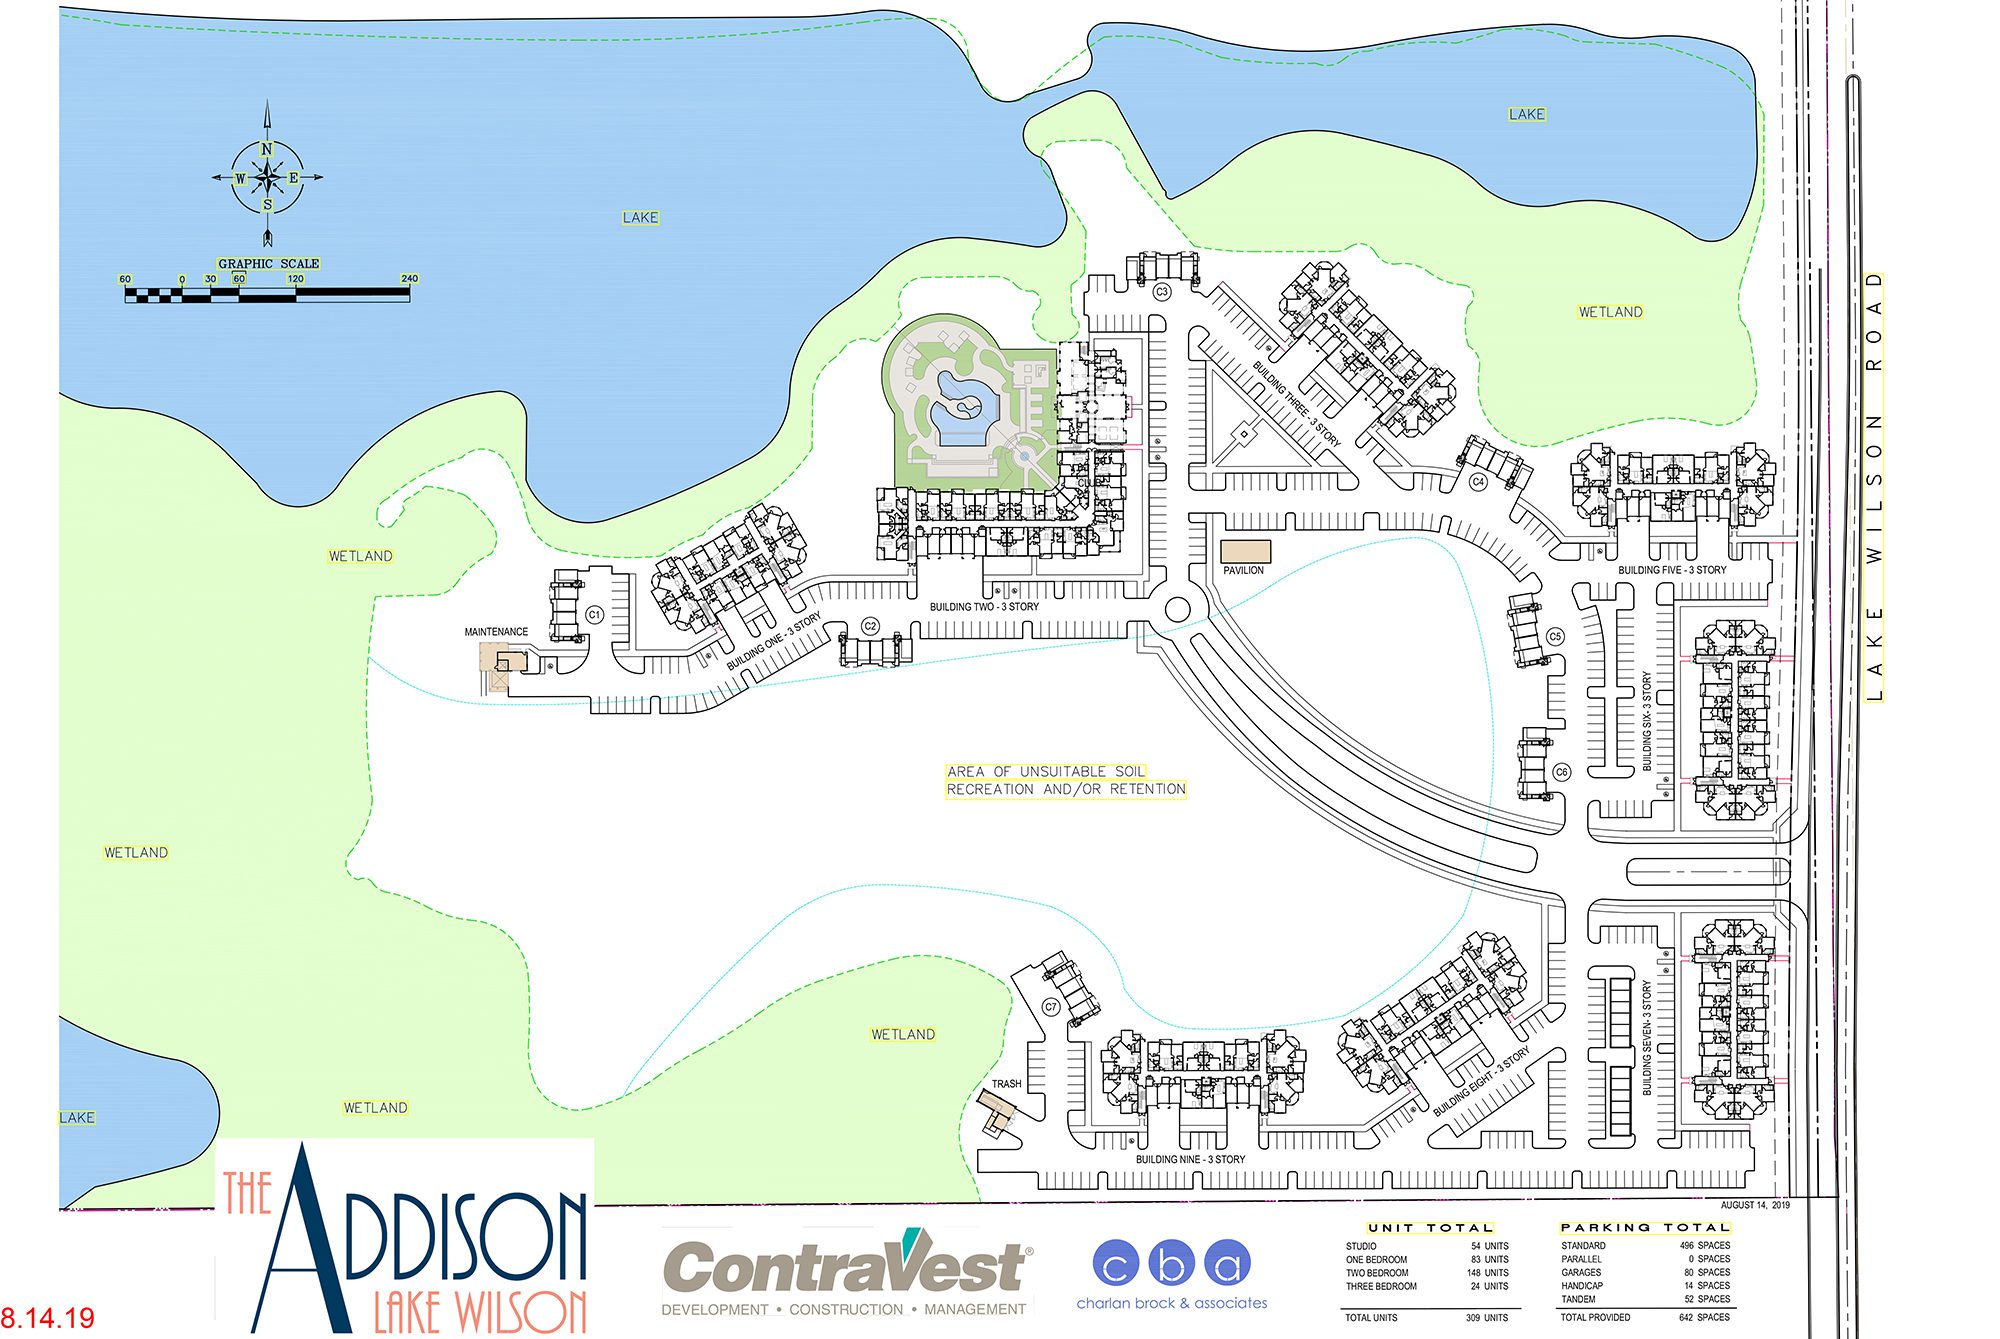 The Addison Lake Wilson site map